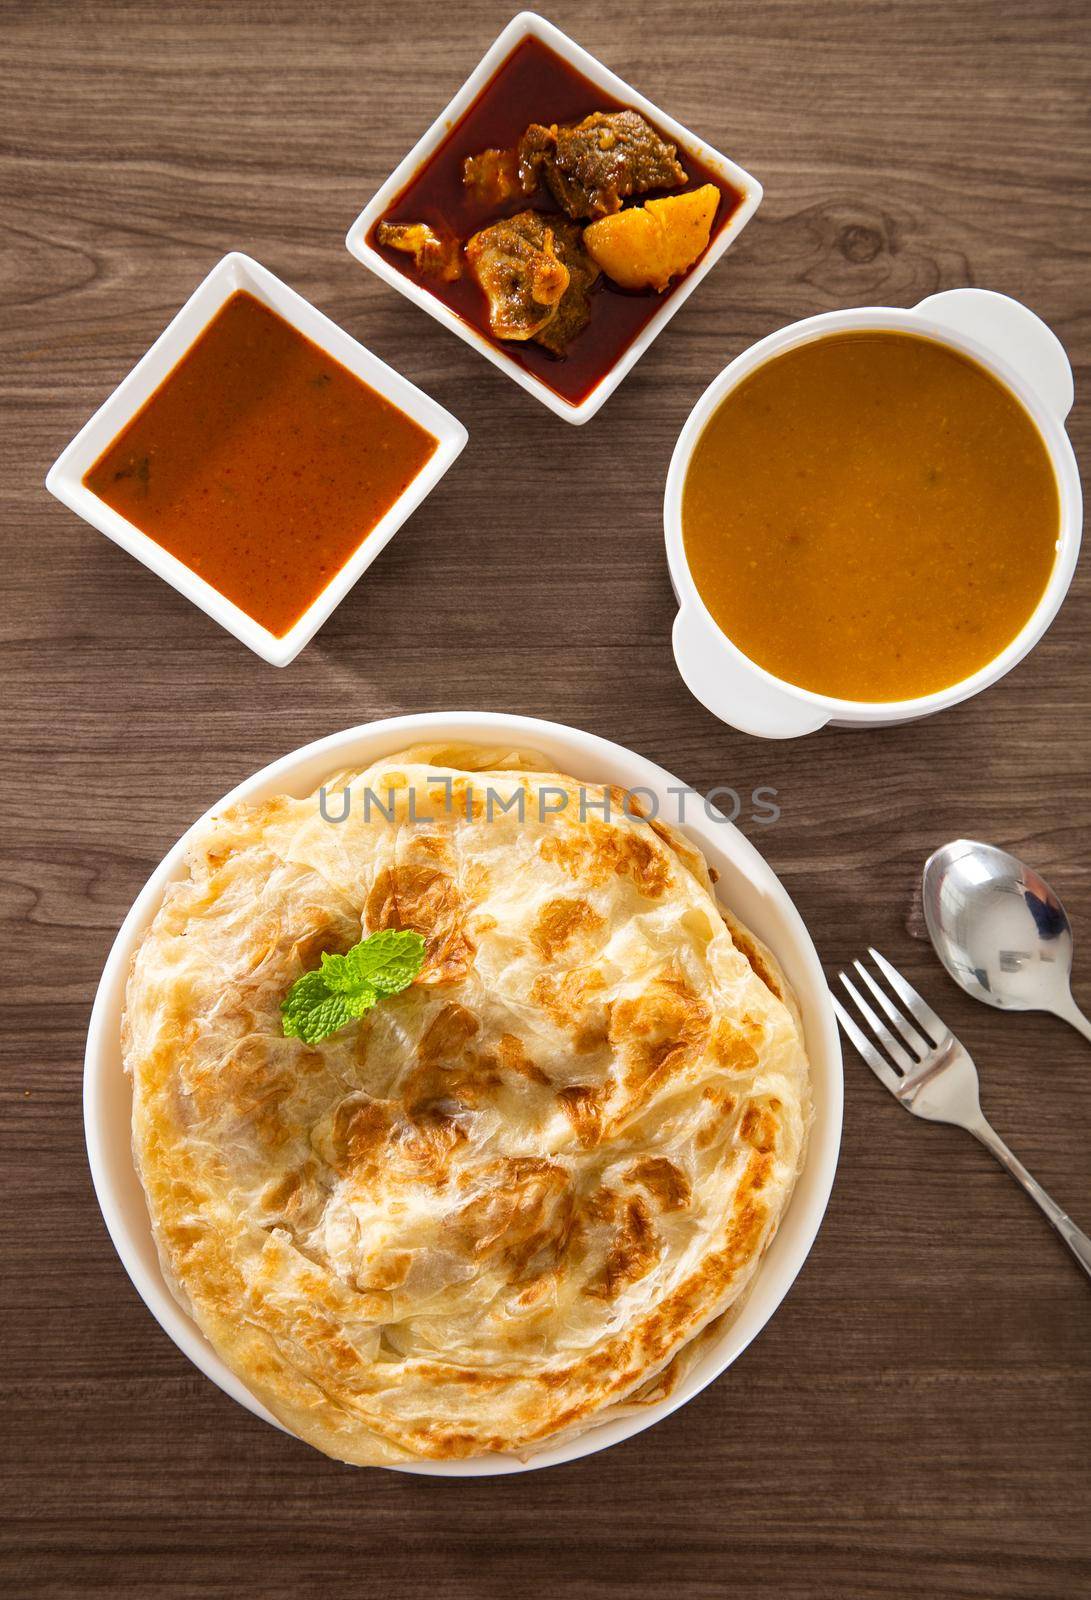 Roti Parata or Roti canai with lamb curry sauce - popular Malaysian breakfast